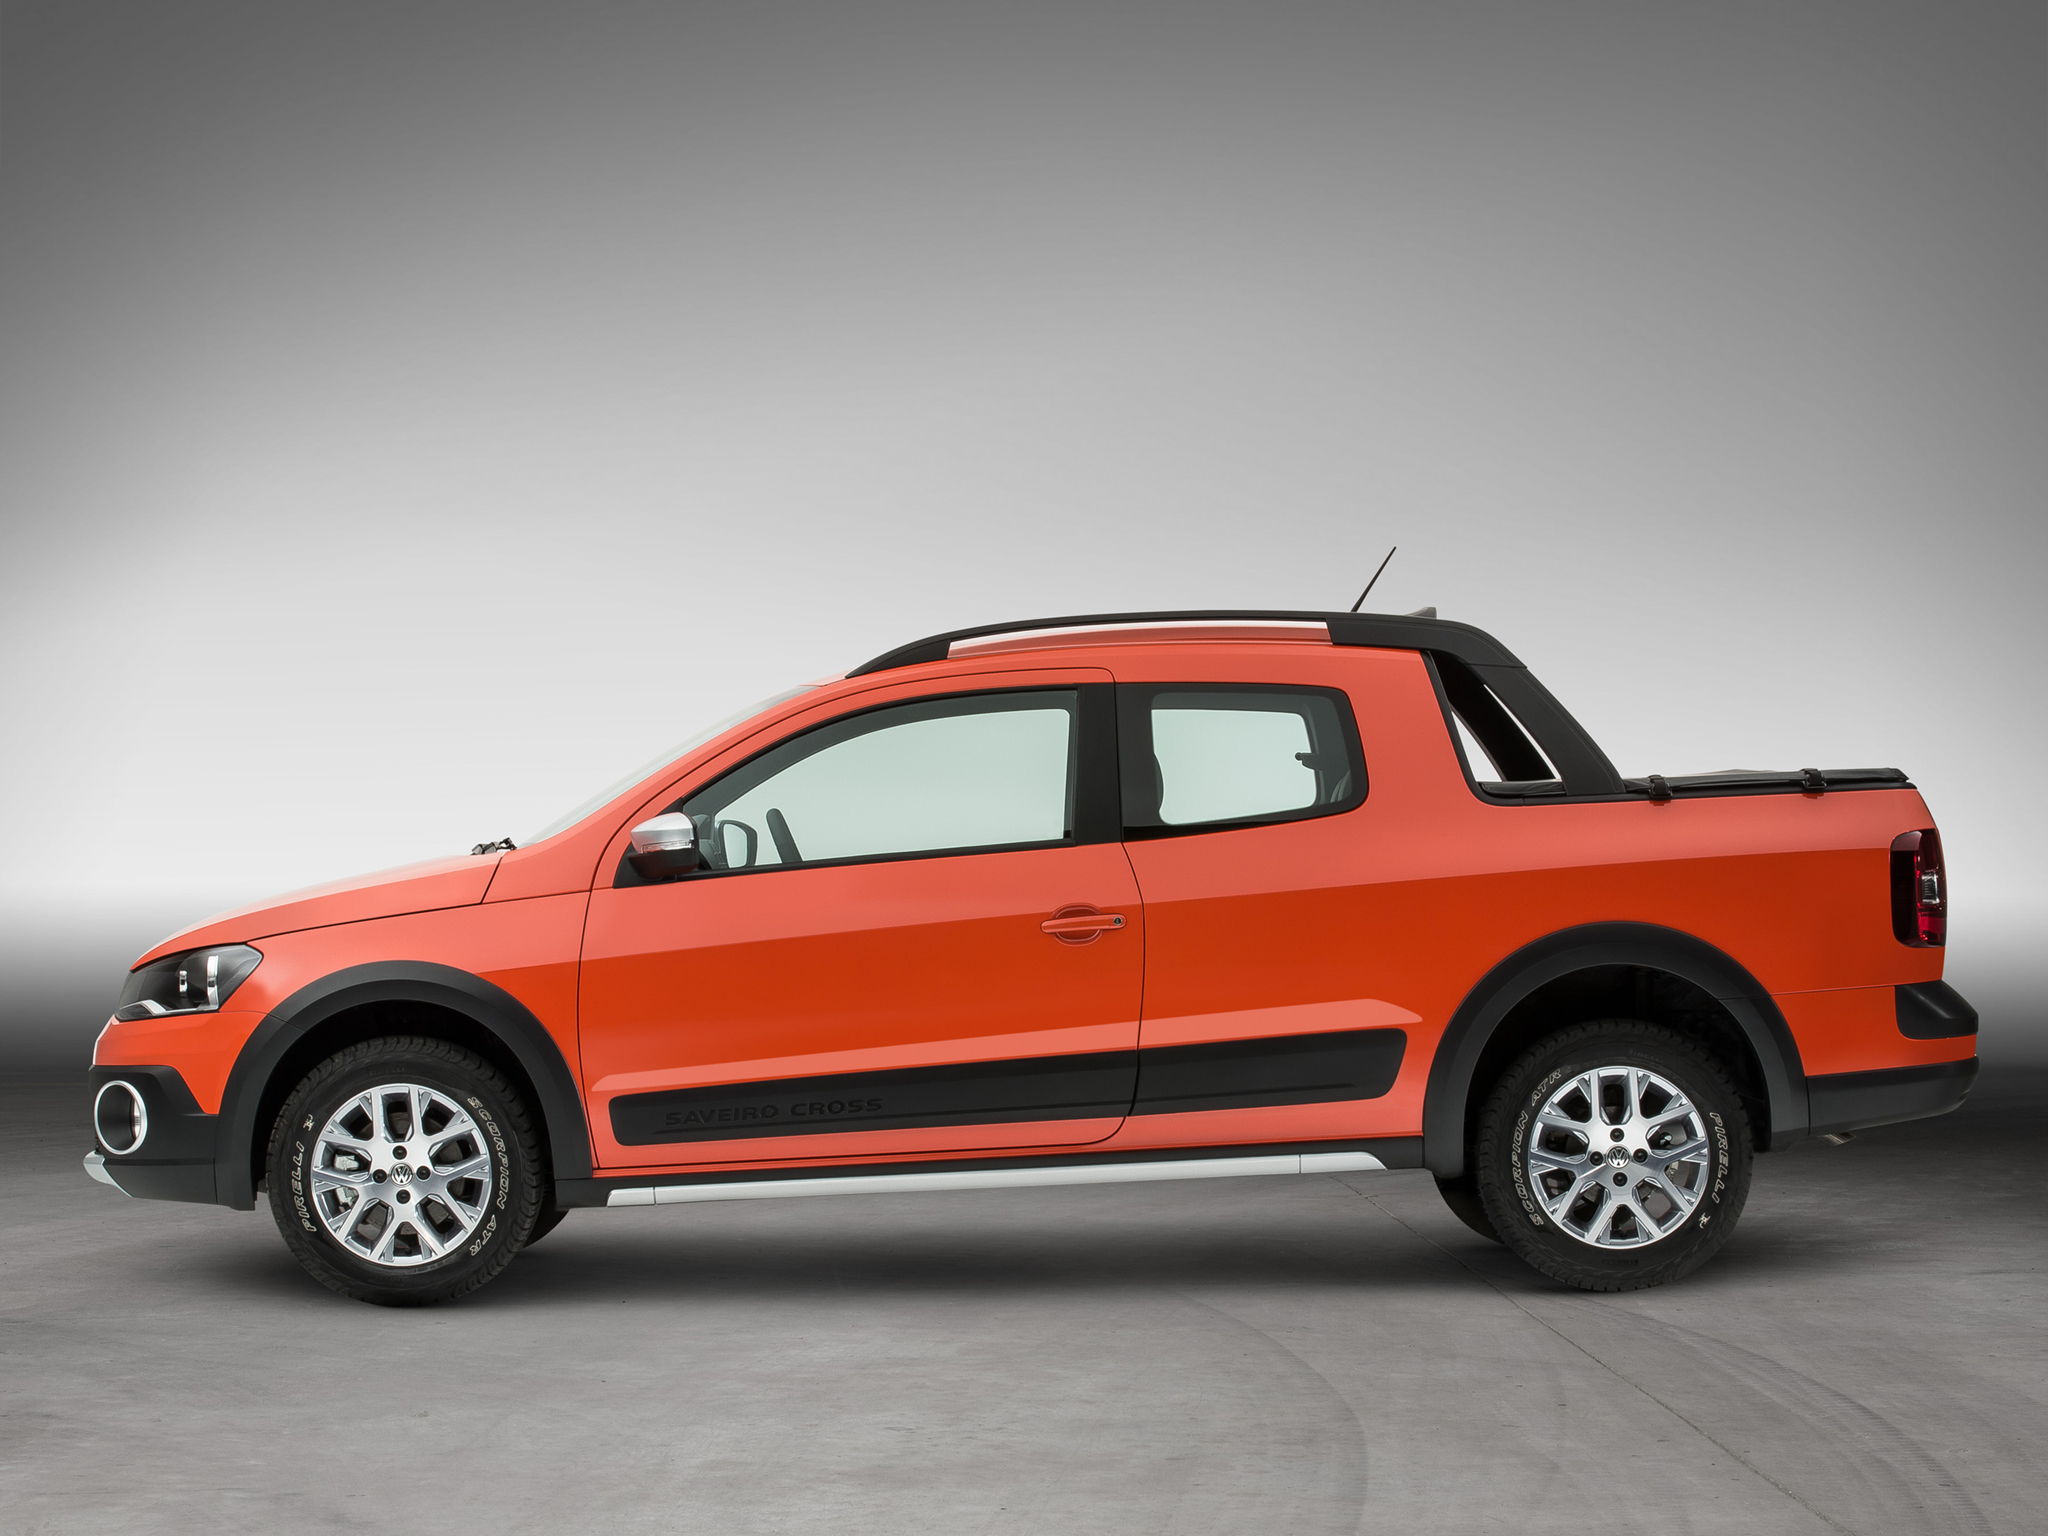 2014 Volkswagen Saveiro Cross Is a Funky Brazilian Pickup [Video] -  autoevolution